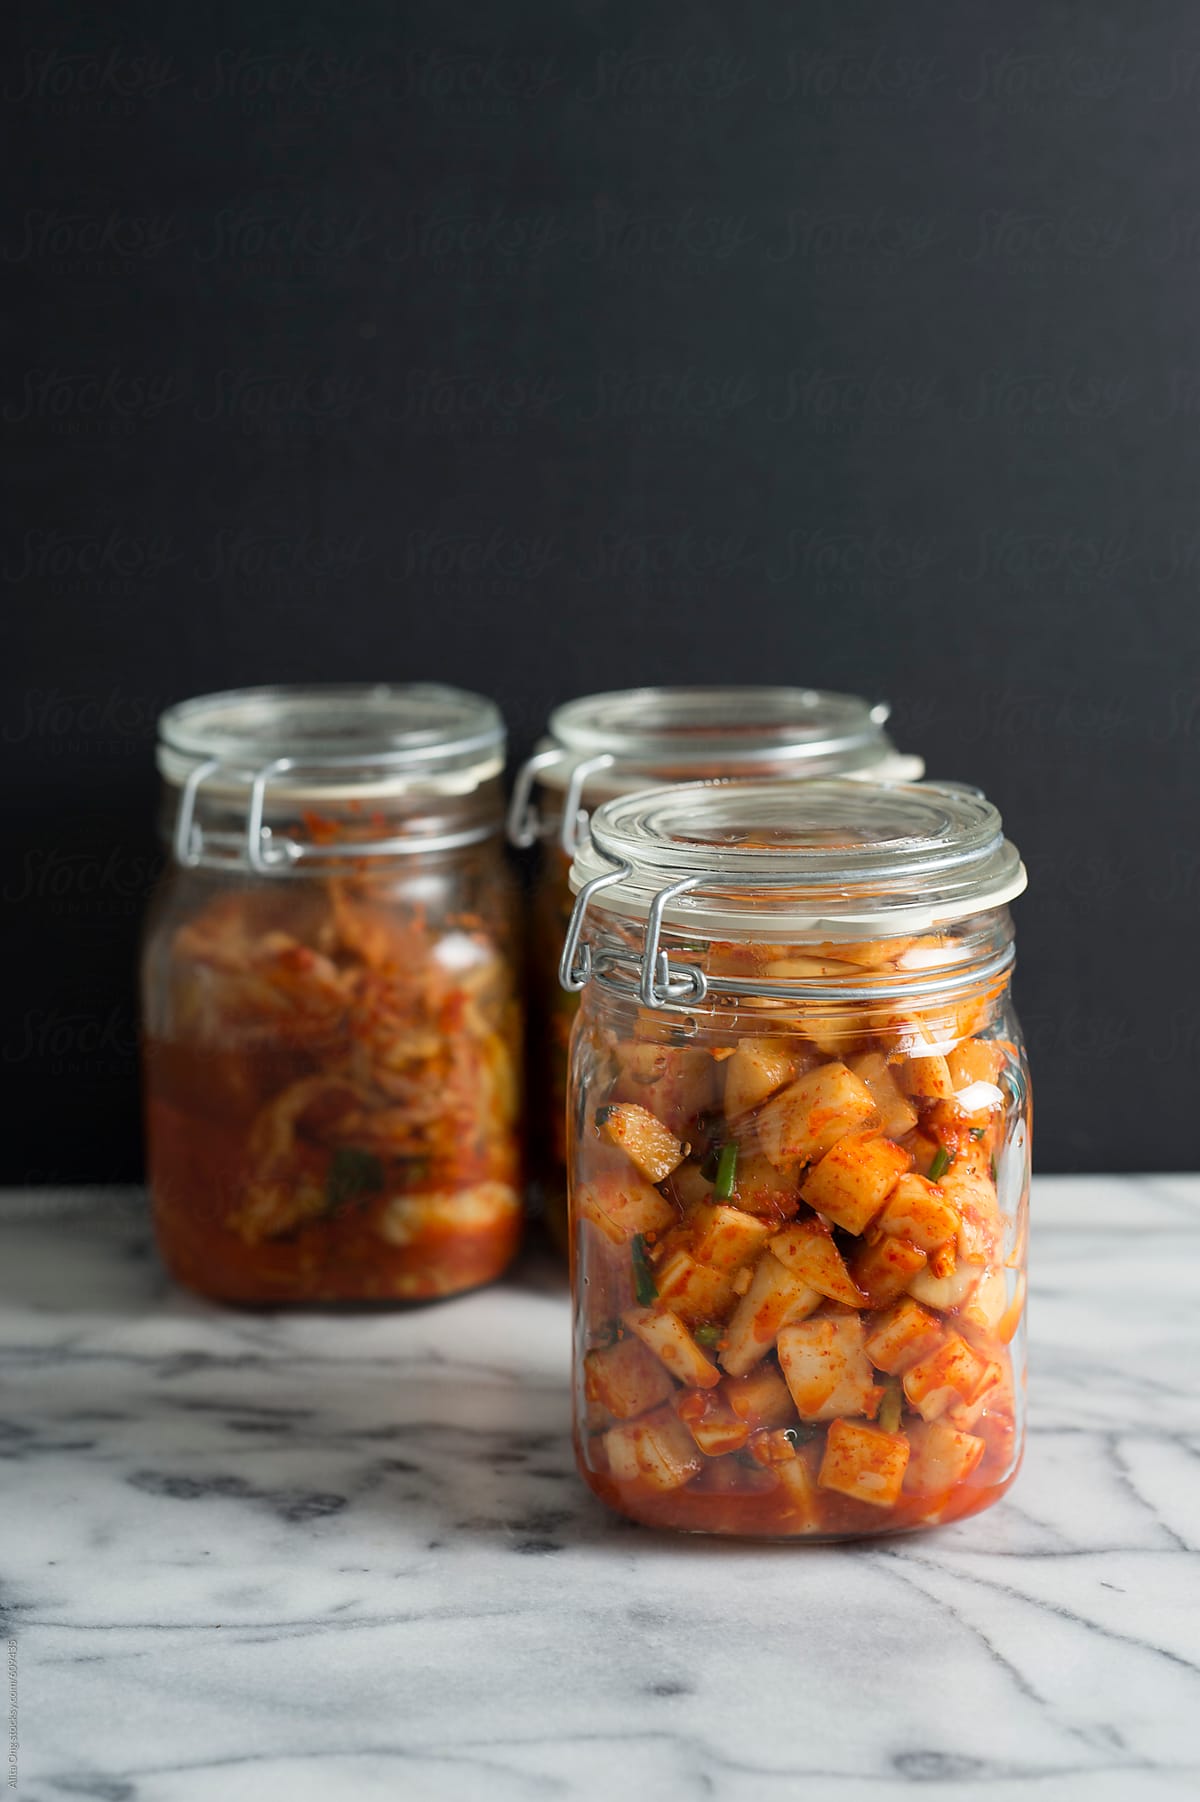 Radish kimchi in a jar